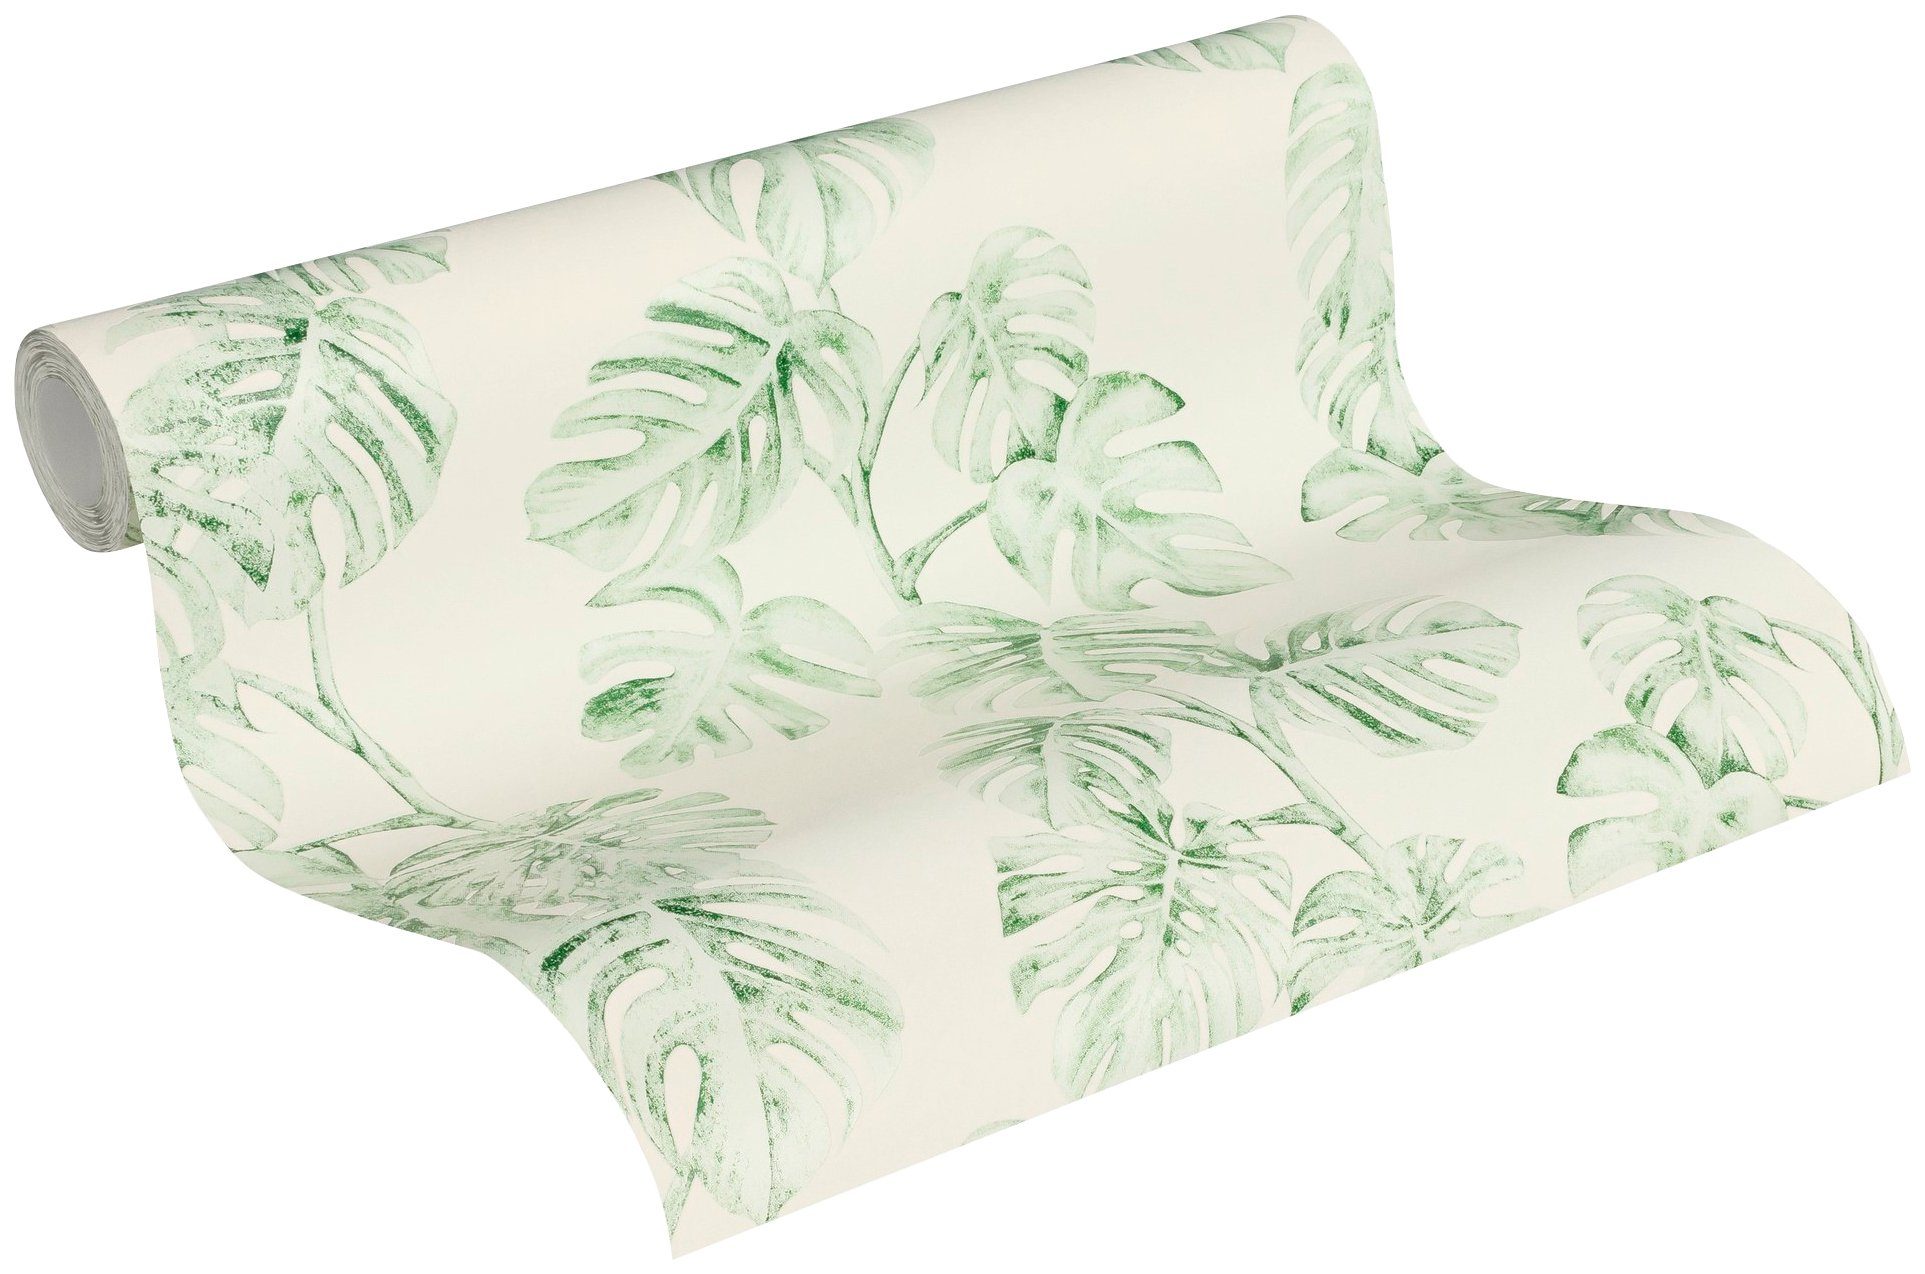 A.S. Création Vliestapete Greenery Palmentapete Dschungel Dschungel floral, Optik, mit Tapete in Palmenprint strukturiert, weiß/grün